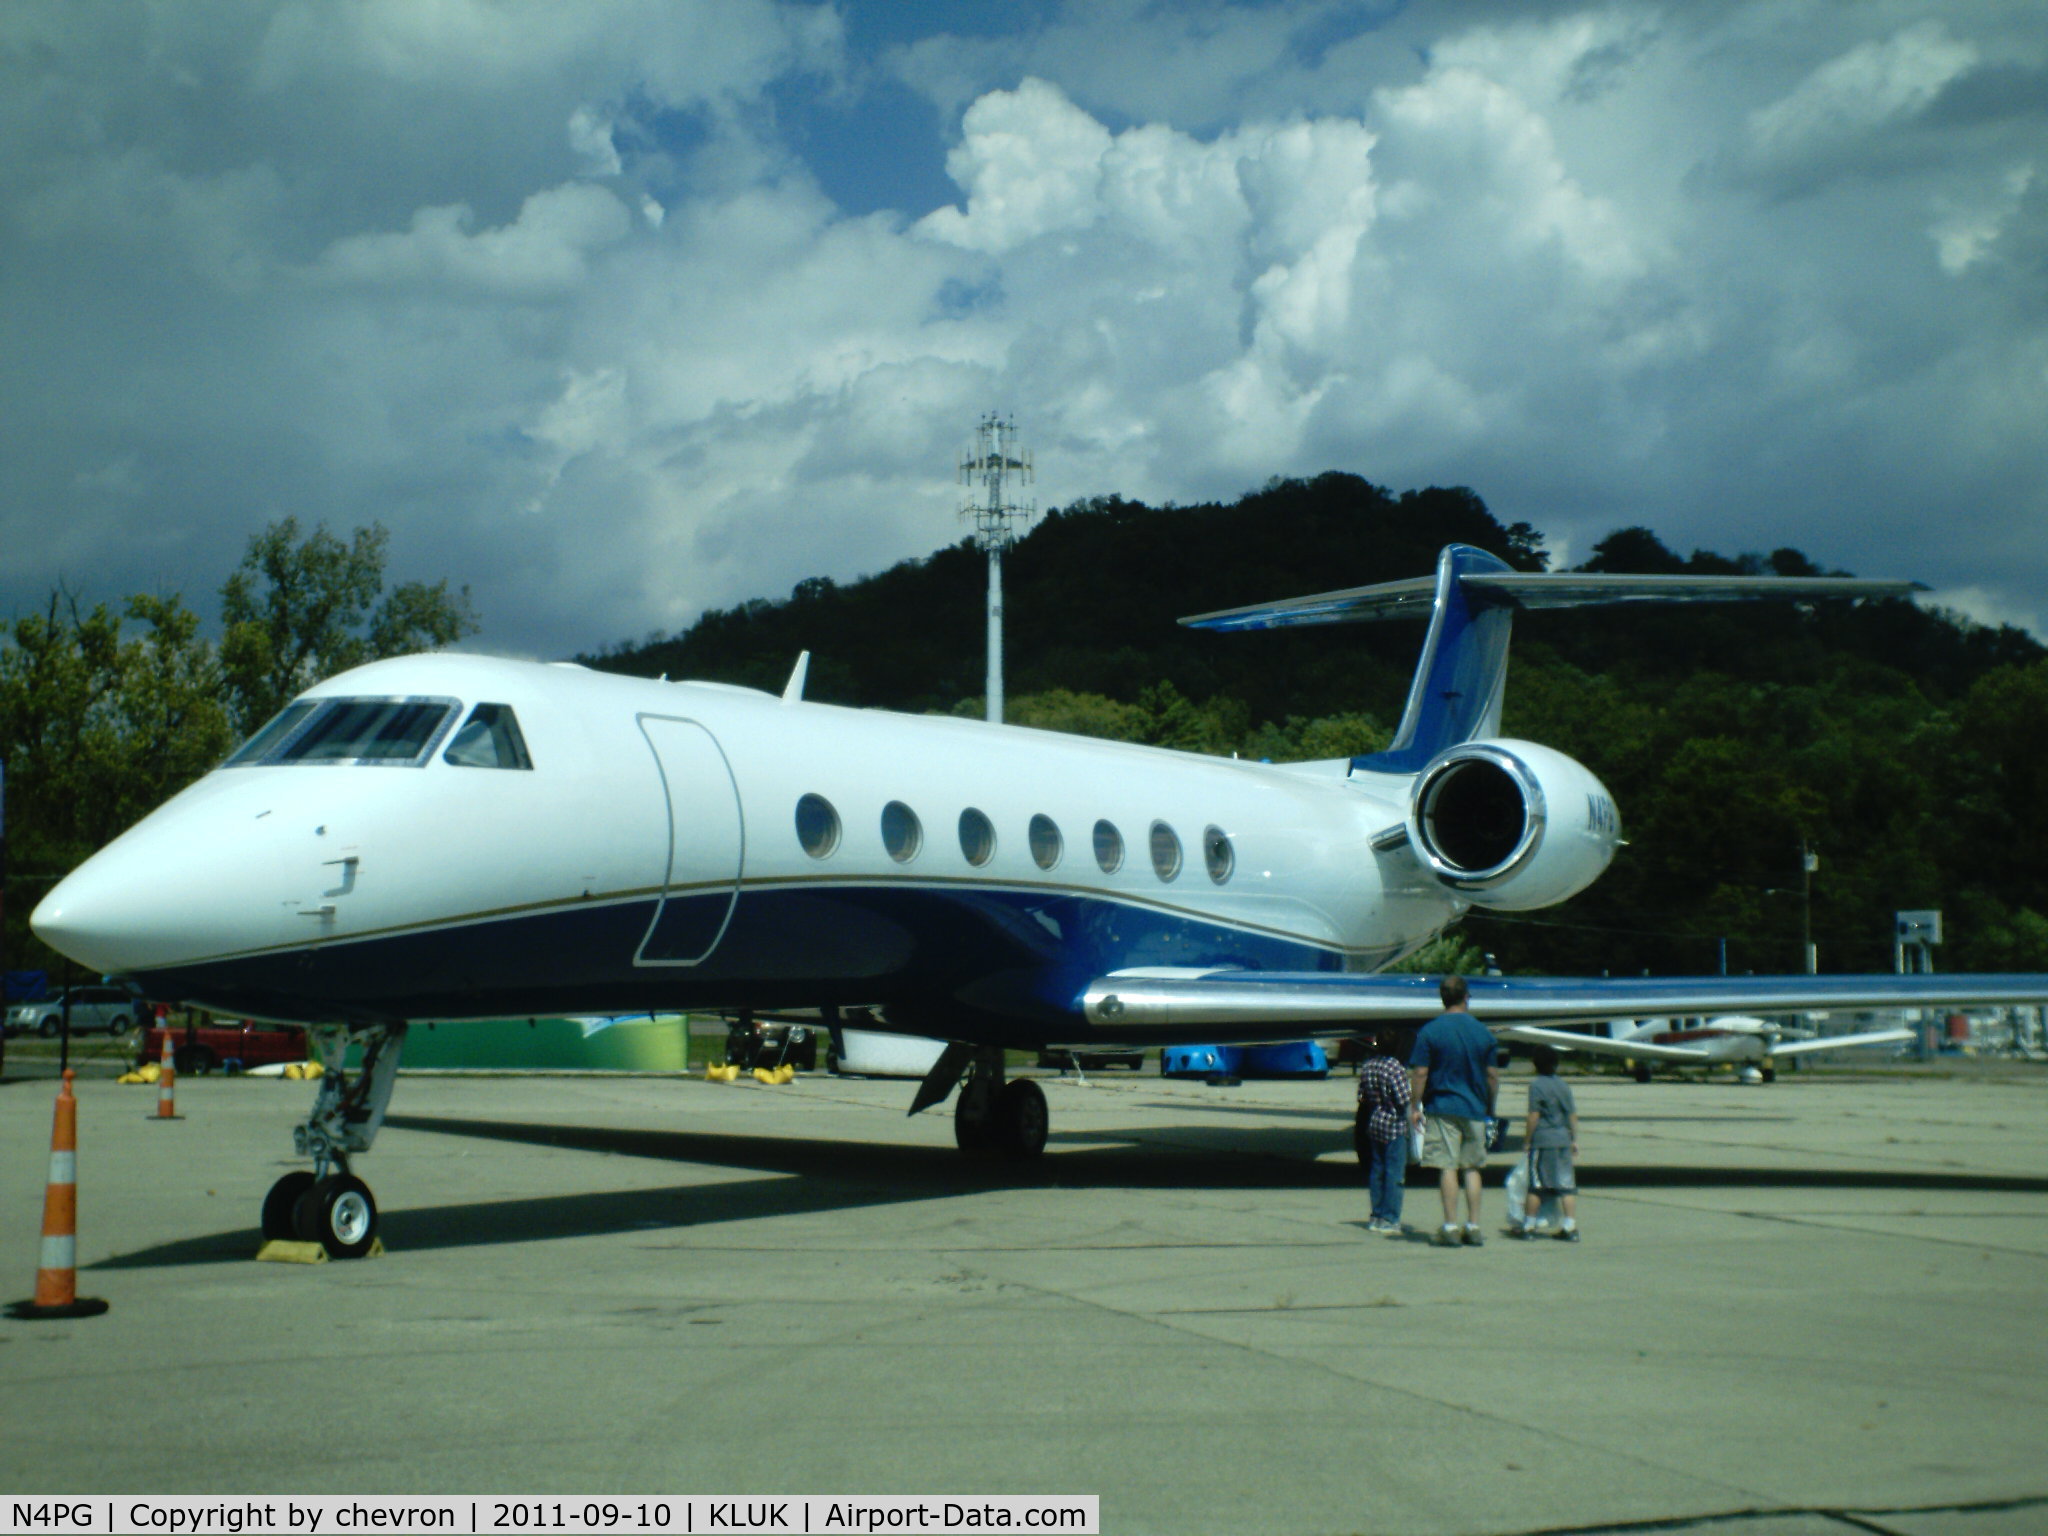 N4PG, 2008 Gulfstream Aerospace GV-SP (G550) C/N 5214, n4pg at kluk aviation days